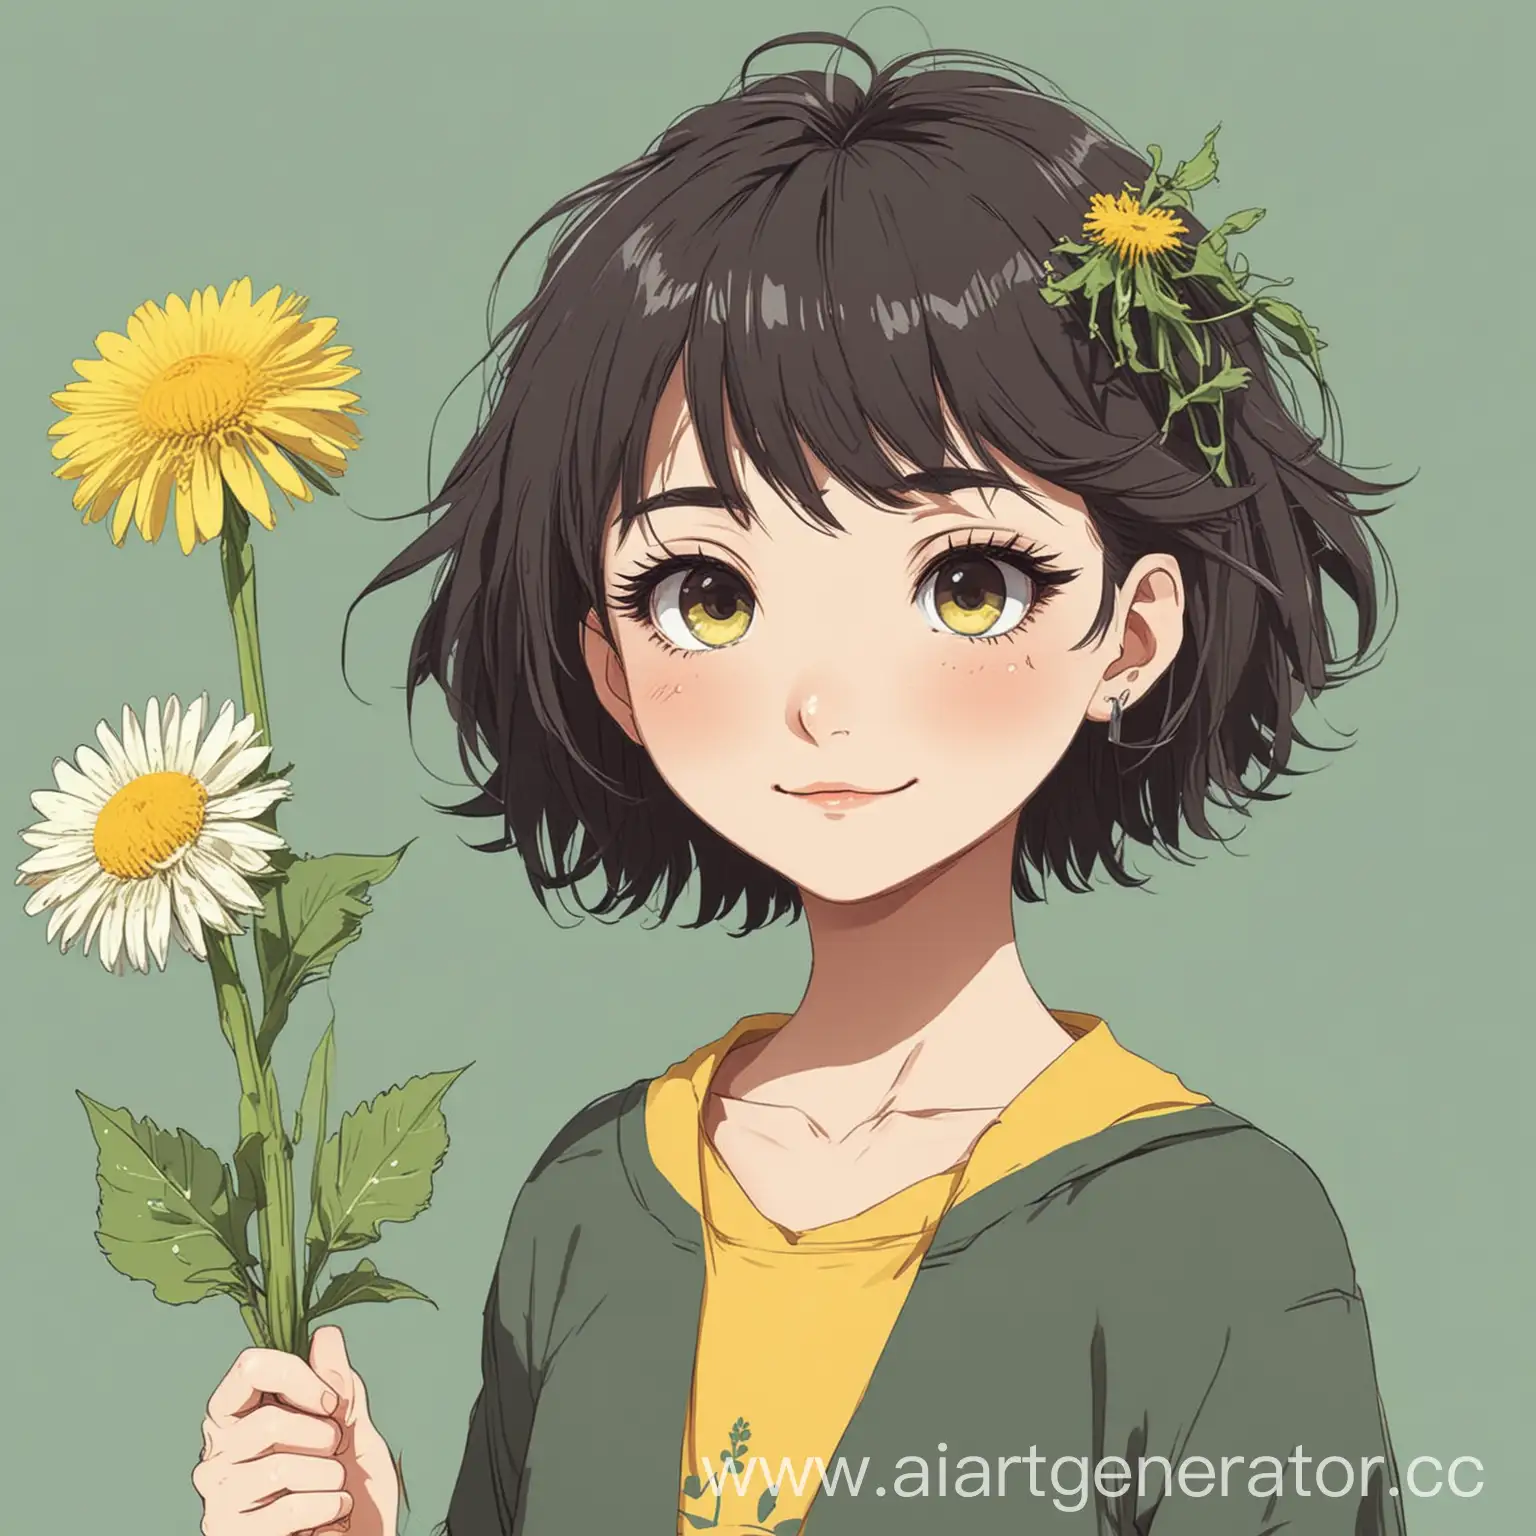 Anime-Style-Dandelion-Character-Vector-Illustration